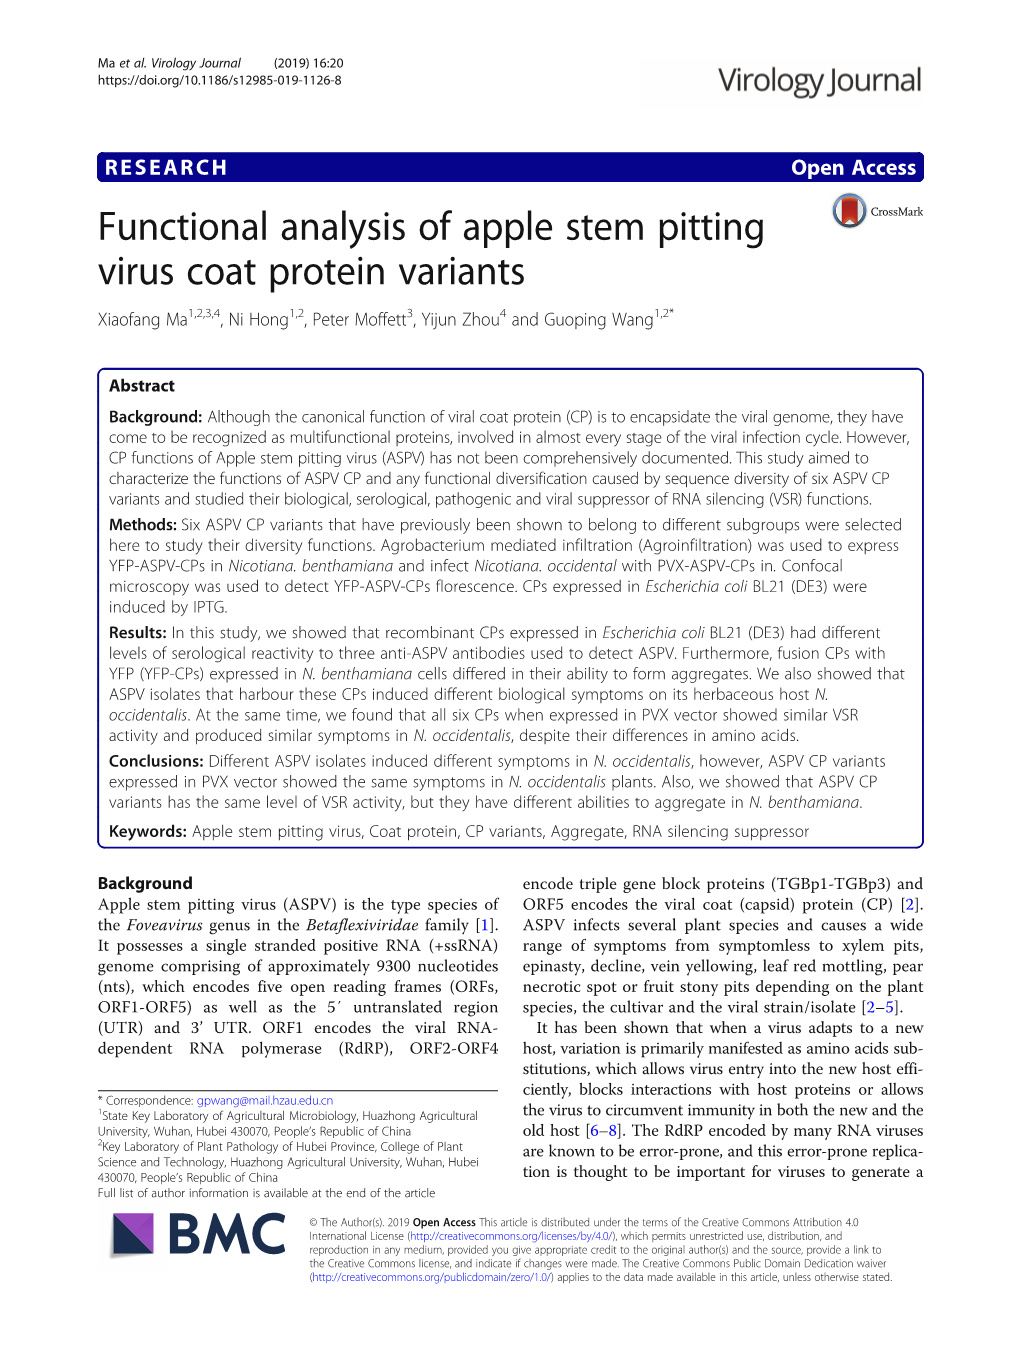 Functional Analysis of Apple Stem Pitting Virus Coat Protein Variants Xiaofang Ma1,2,3,4, Ni Hong1,2, Peter Moffett3, Yijun Zhou4 and Guoping Wang1,2*